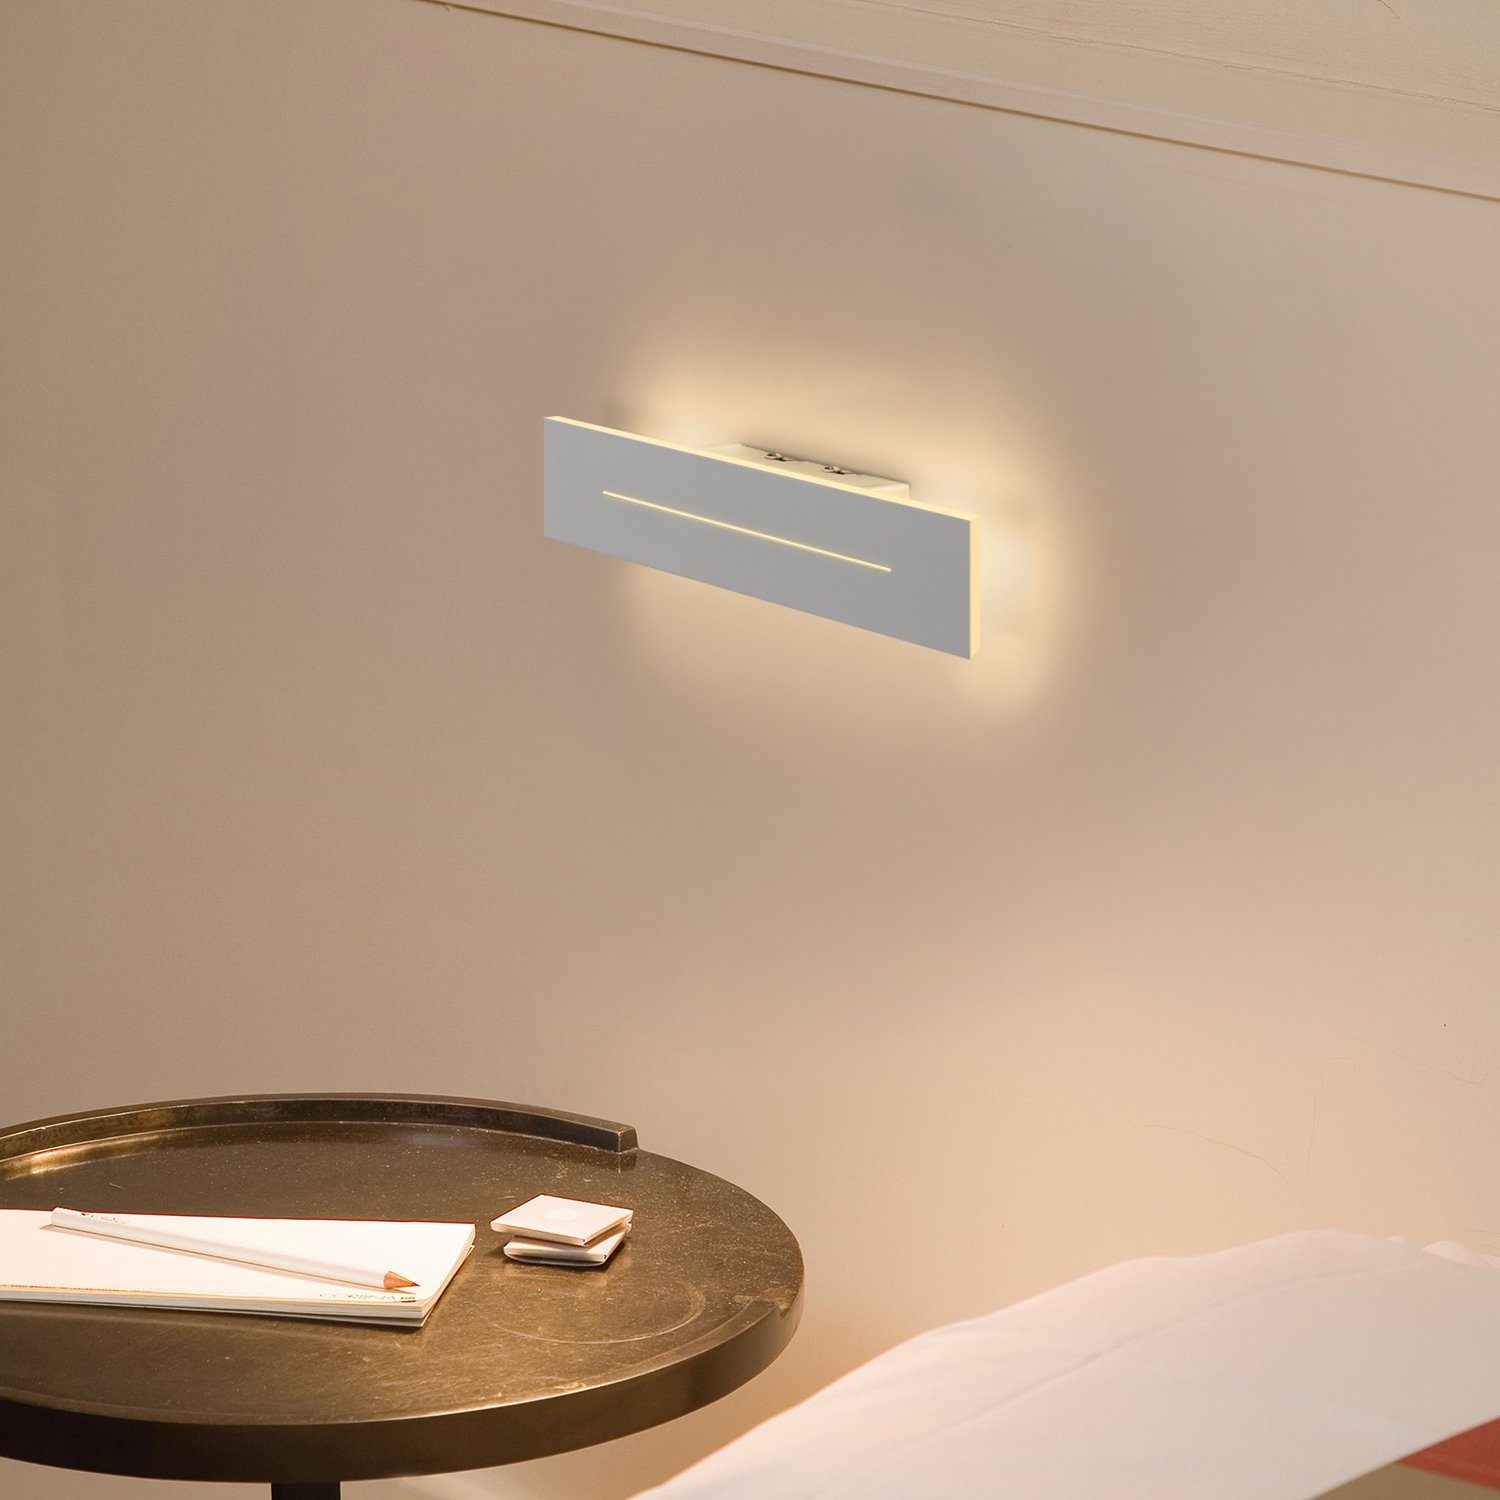 ZMH LED Wandleuchte fest LED Wandlampe 30cm integriert, warmweiß, 100cm, 60cm weiß/schwarz innen 30cm Weiß